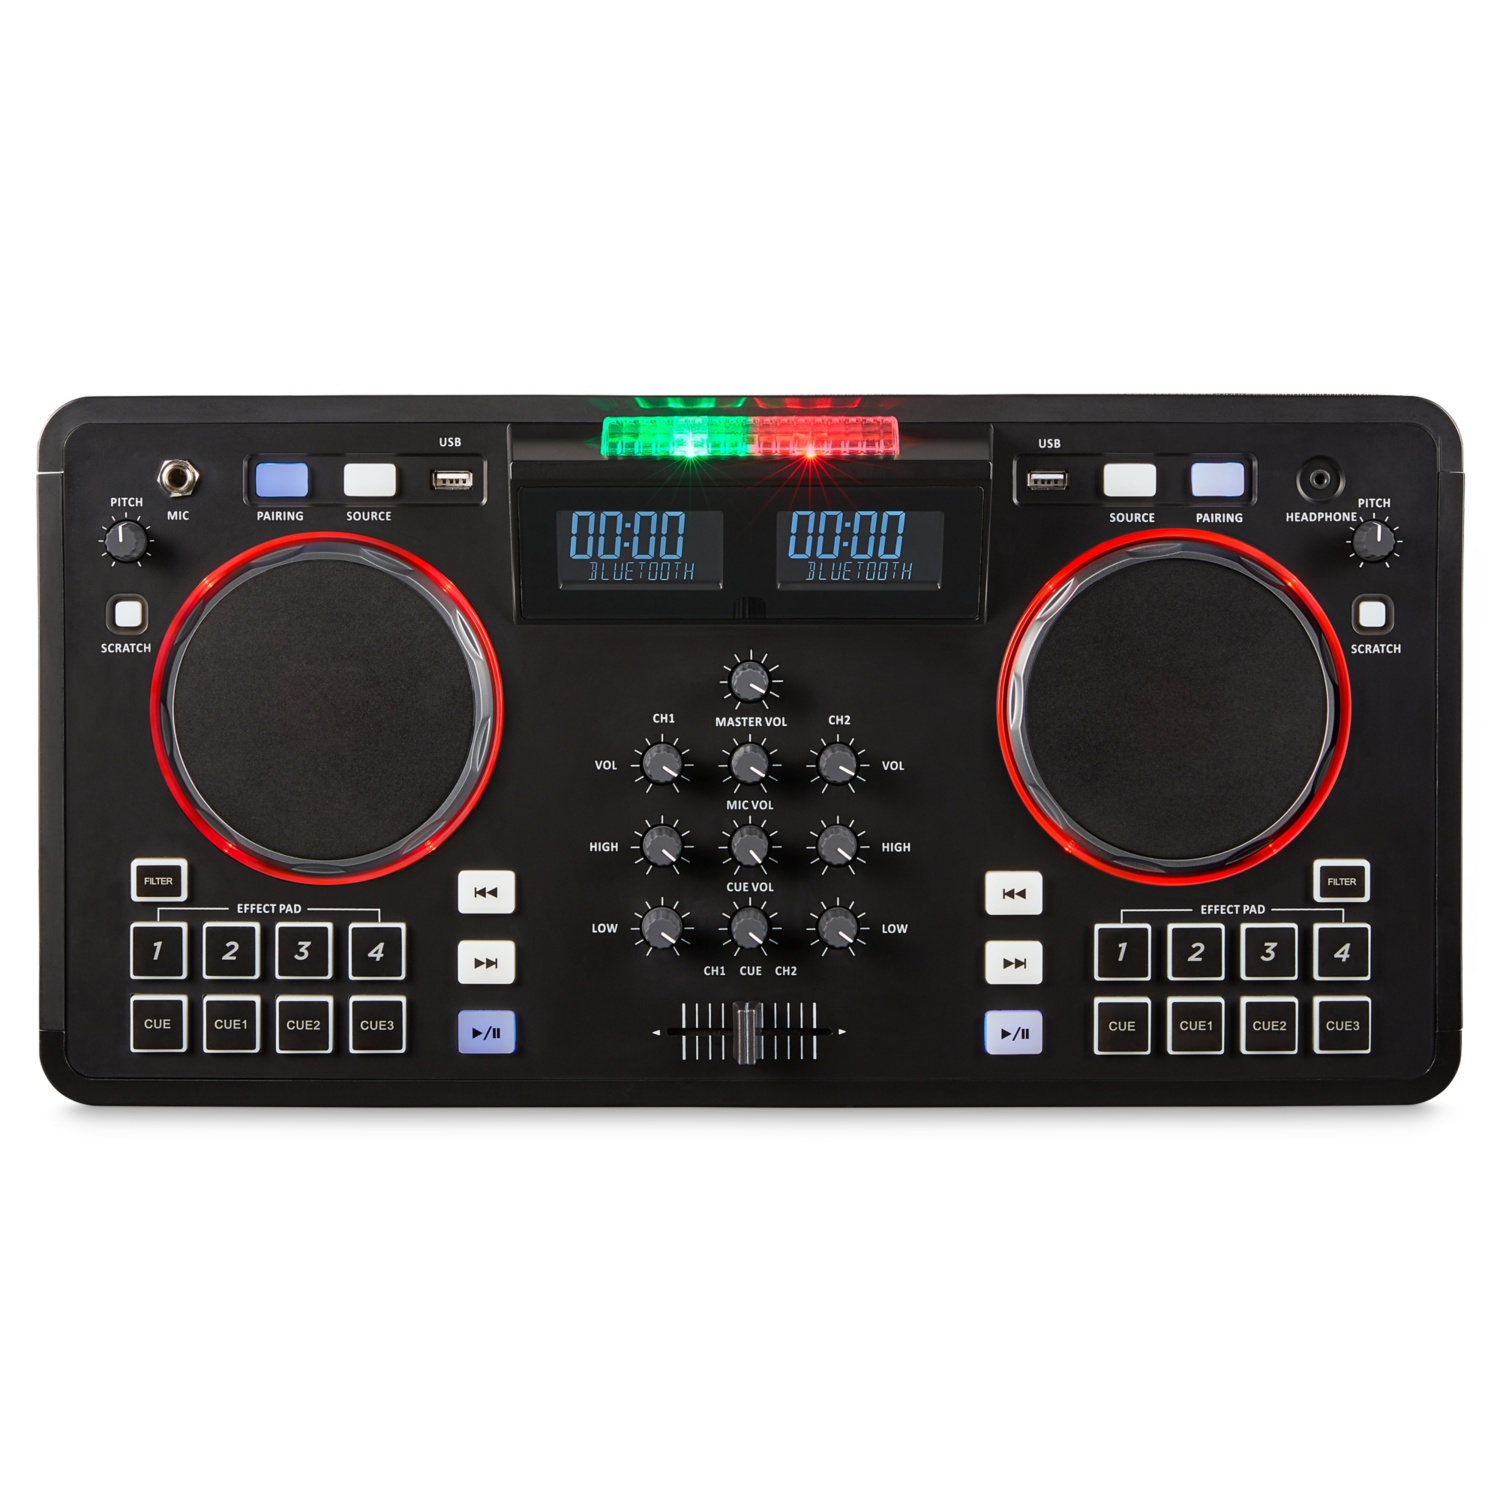 MEDION® LIFE® X61420 Party Lautsprecher mit DJ-Controller